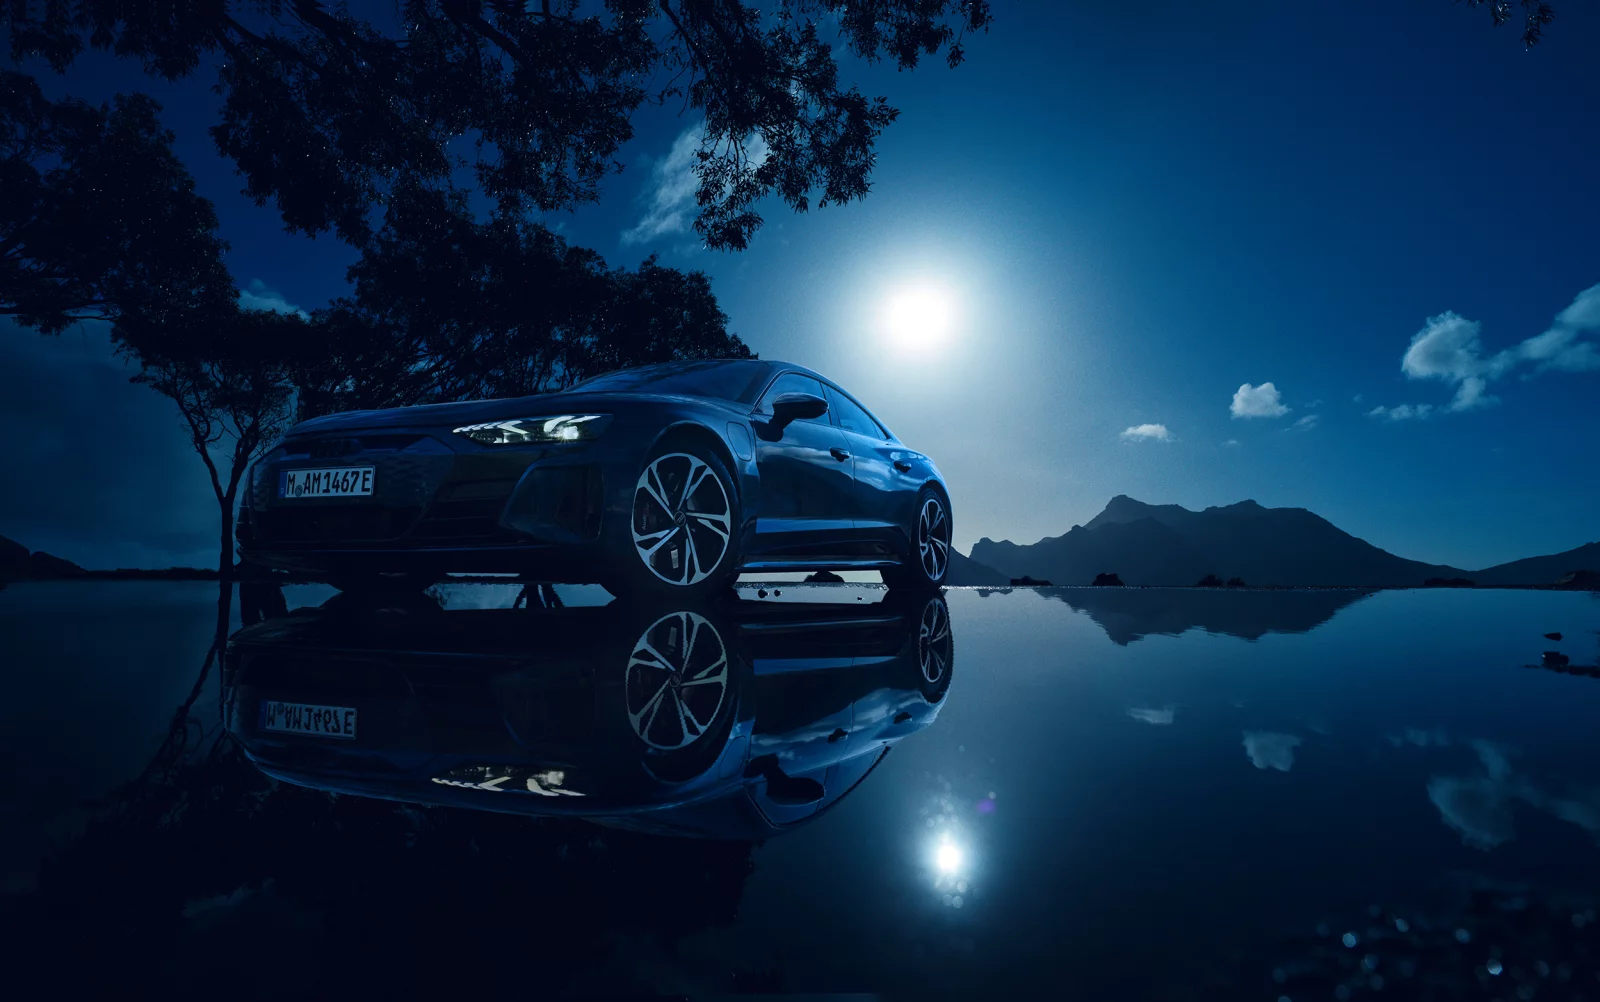 Audi Etron x Gybow 1 by Thomas STROGALSKI